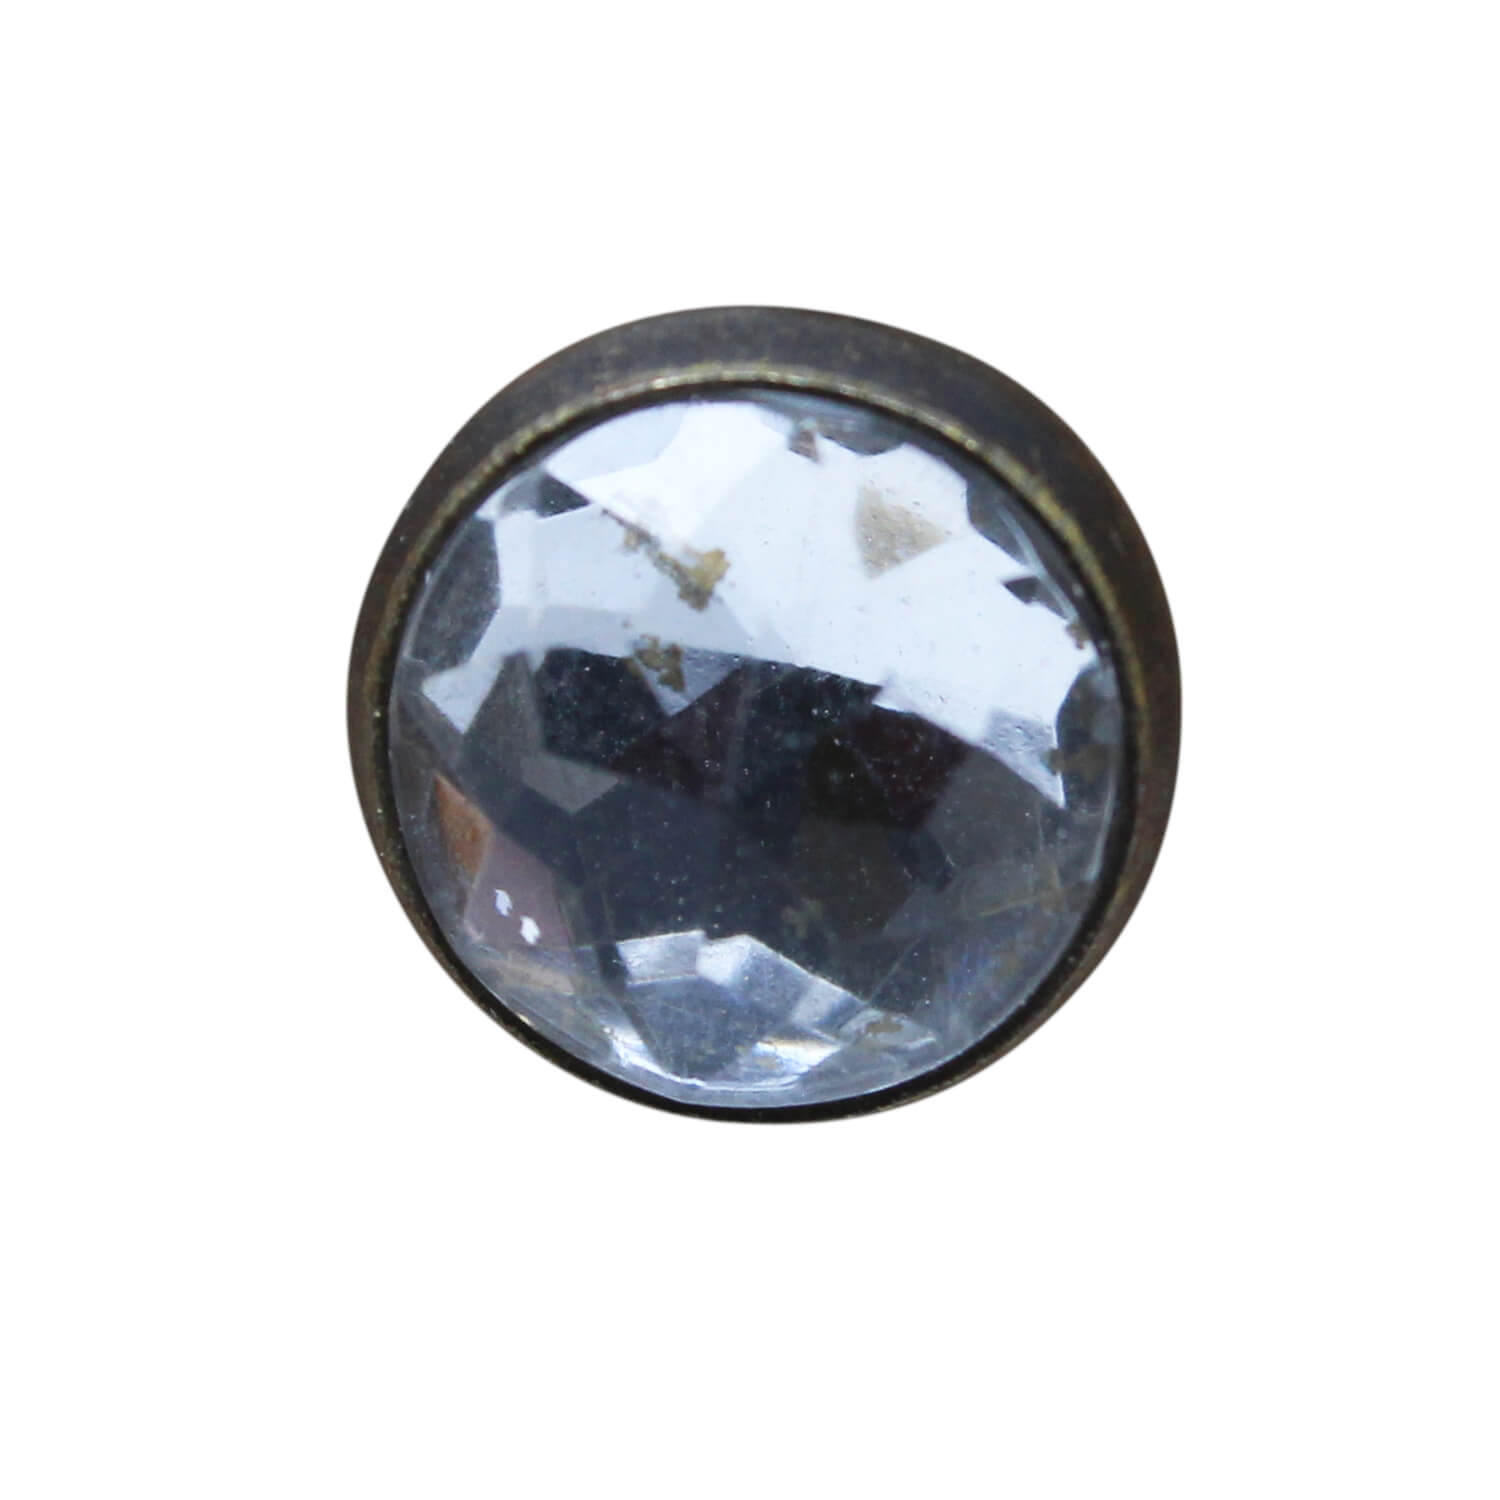 15 Ziernägel - Polsternägel - 11mm - Diamant Klar-Dunkel